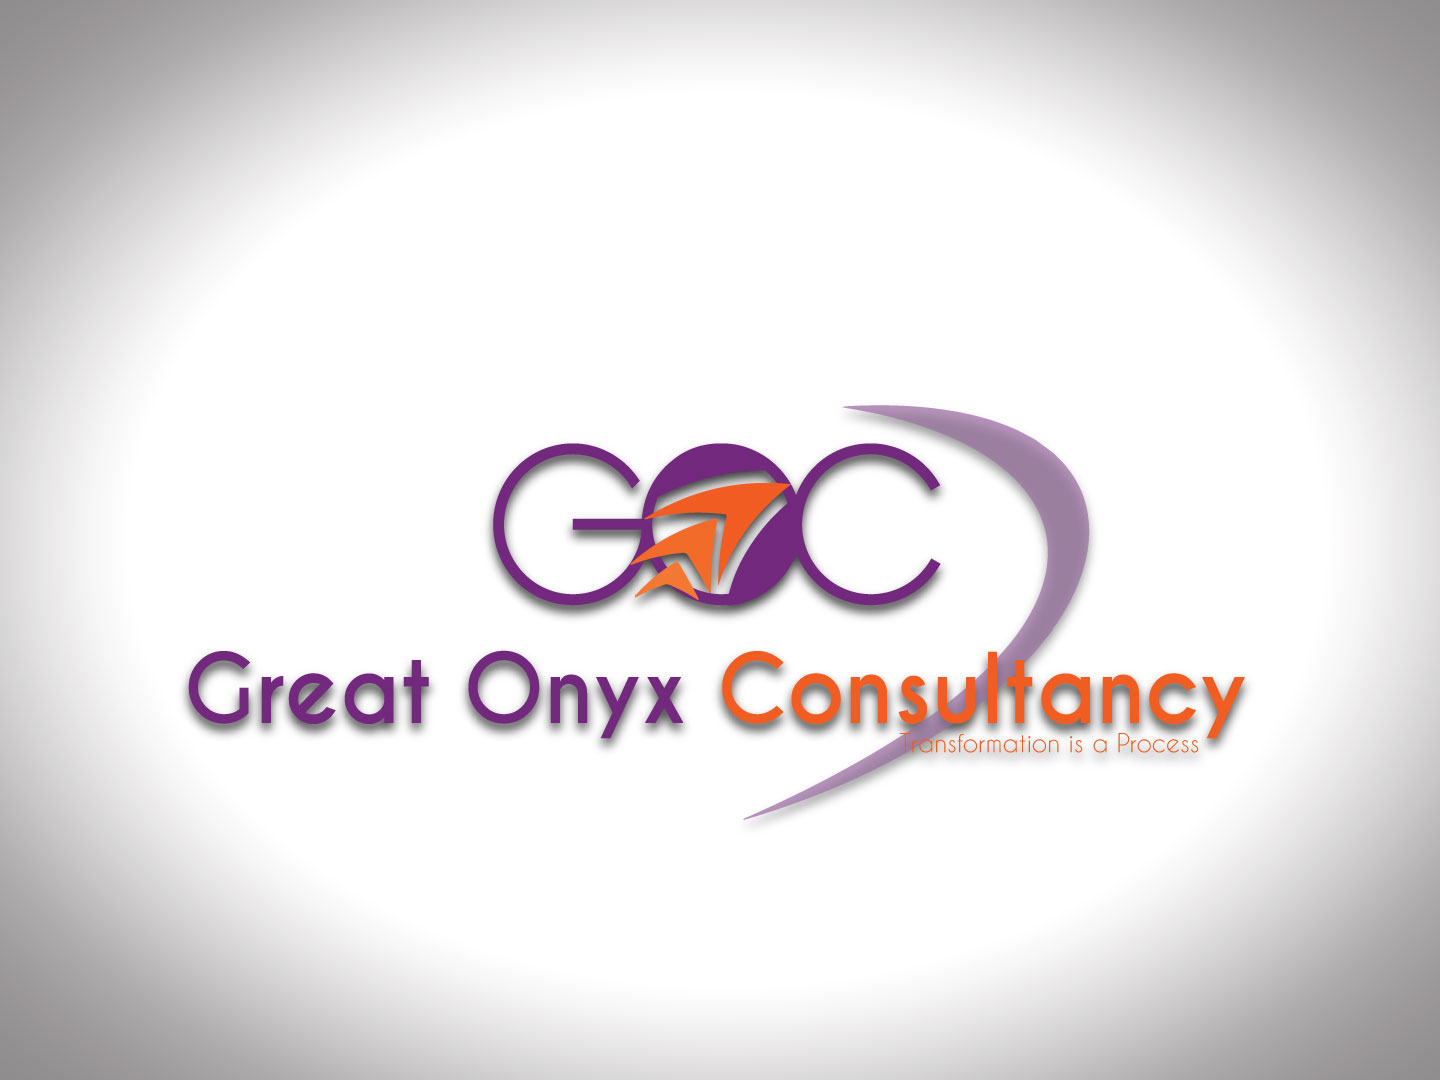 Great Onyx Consultancy